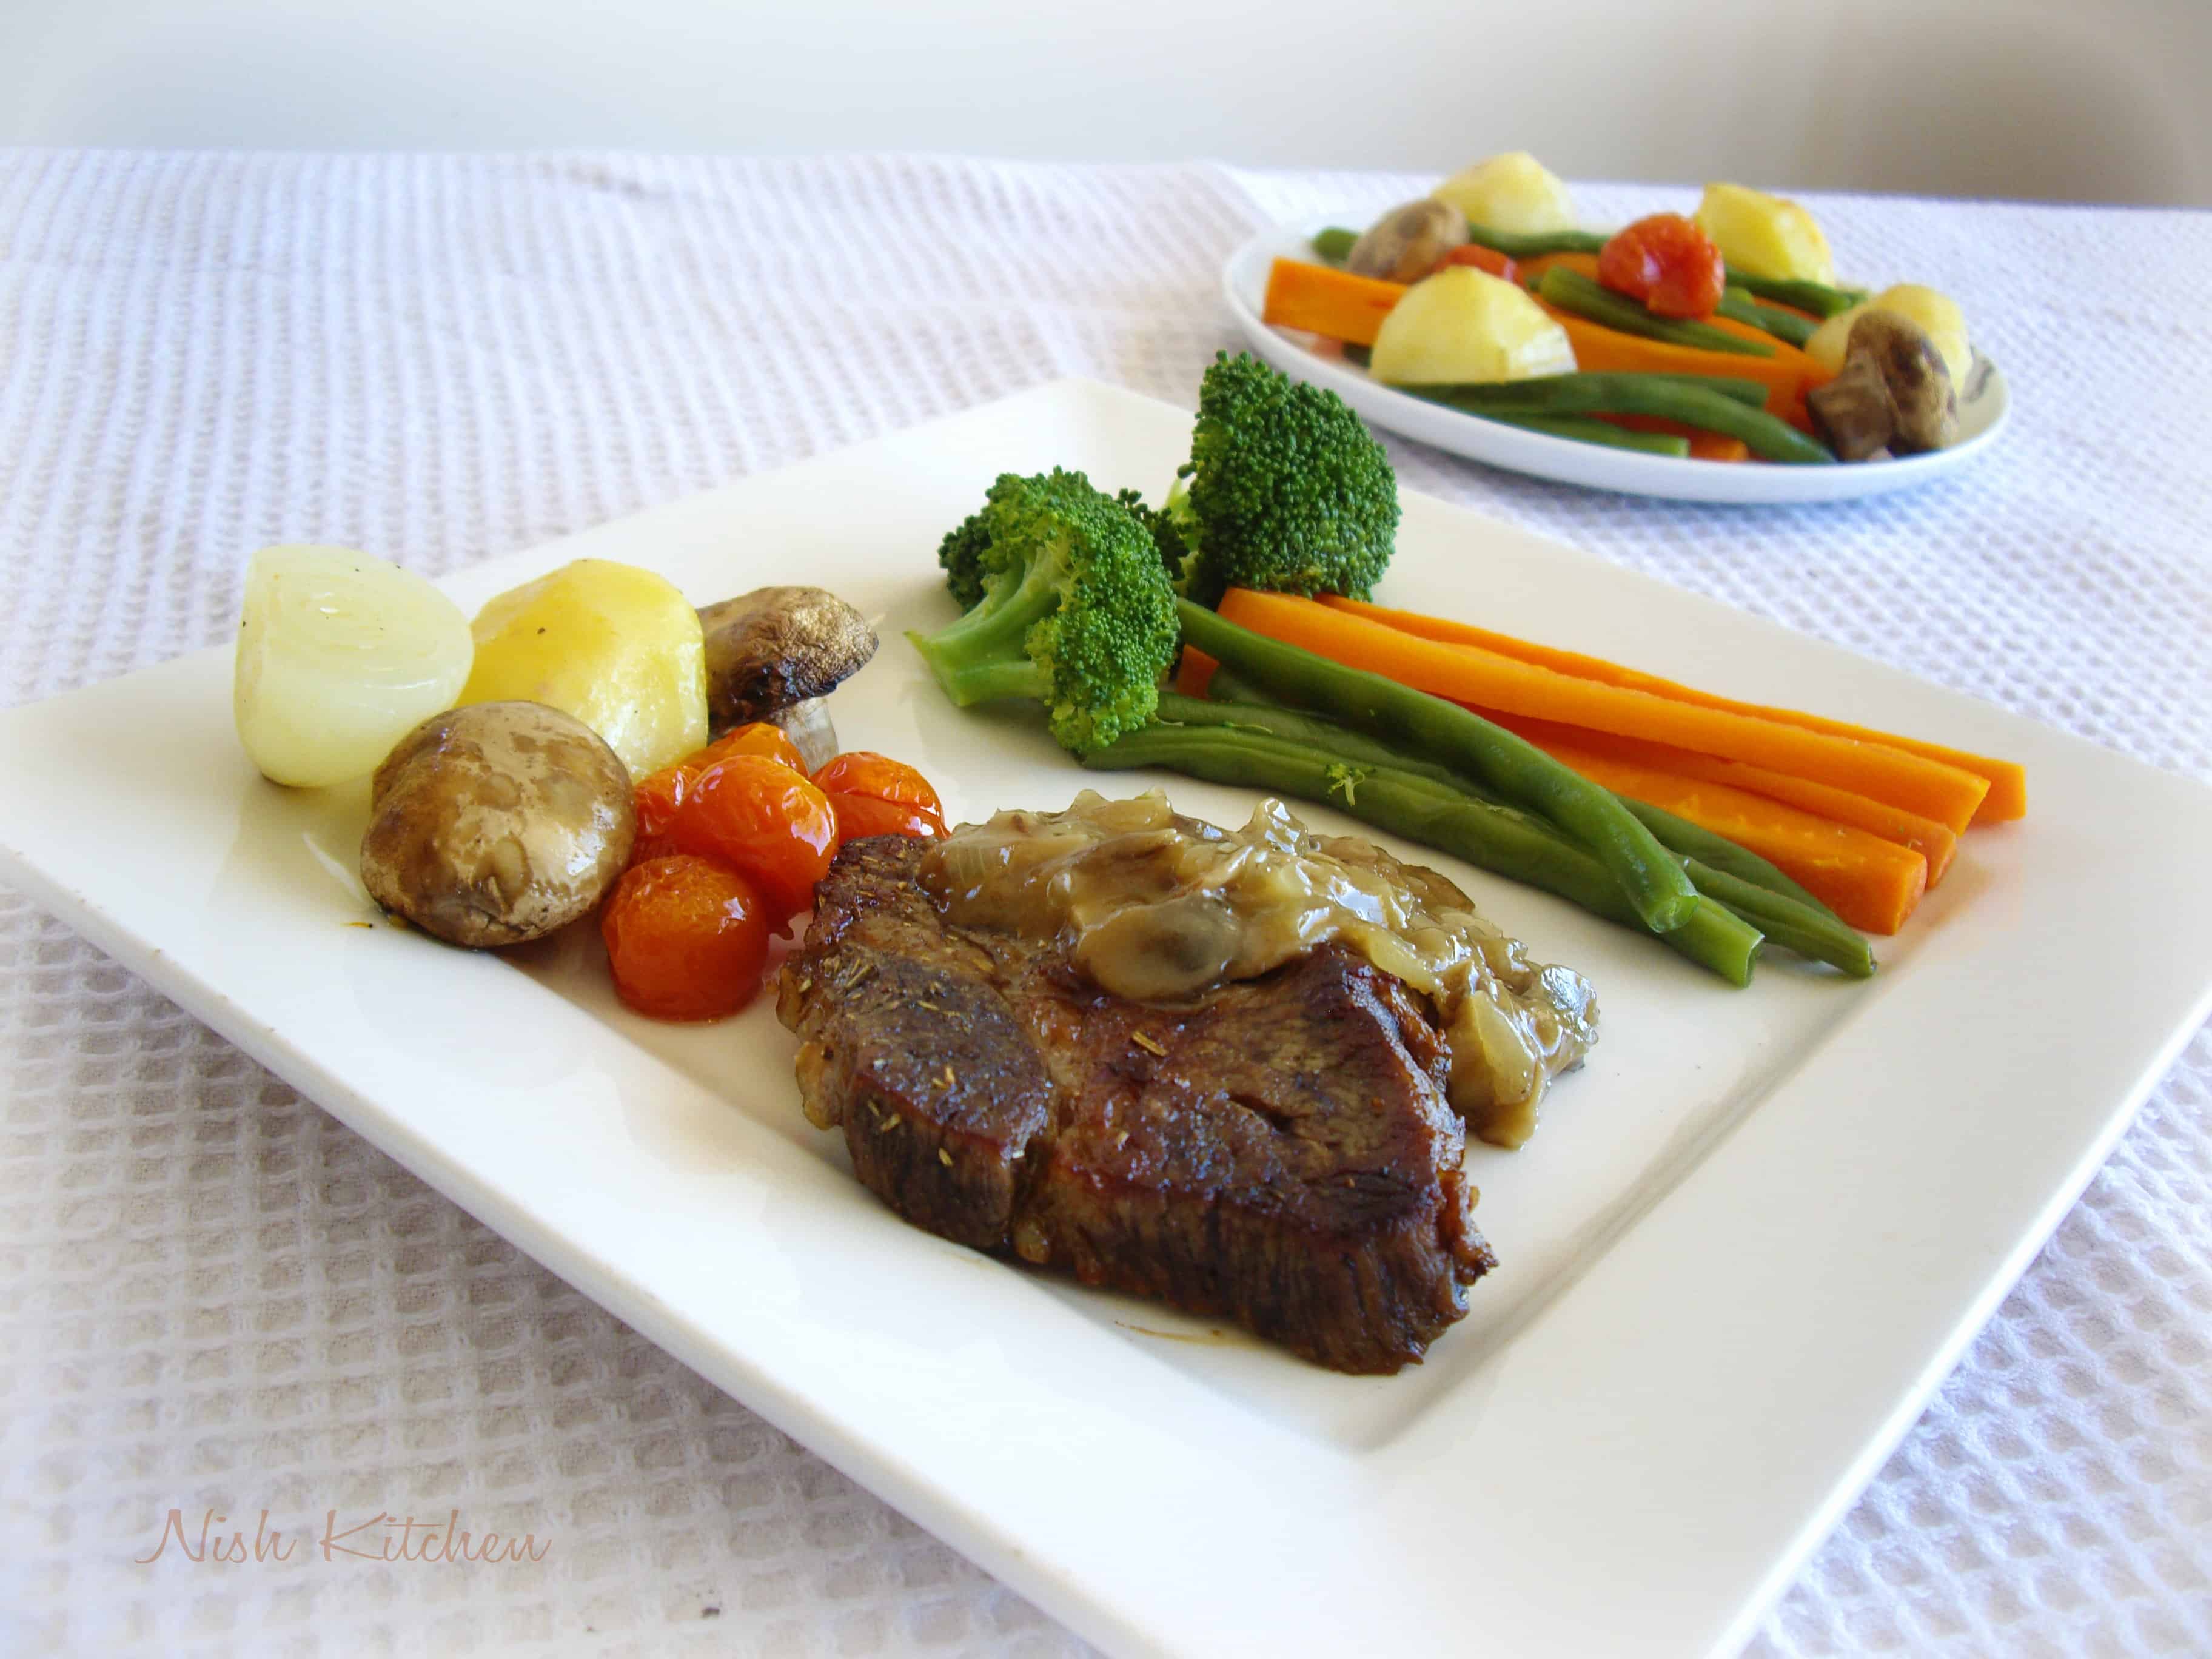 Steak with Mushroom Sauce and Veggies